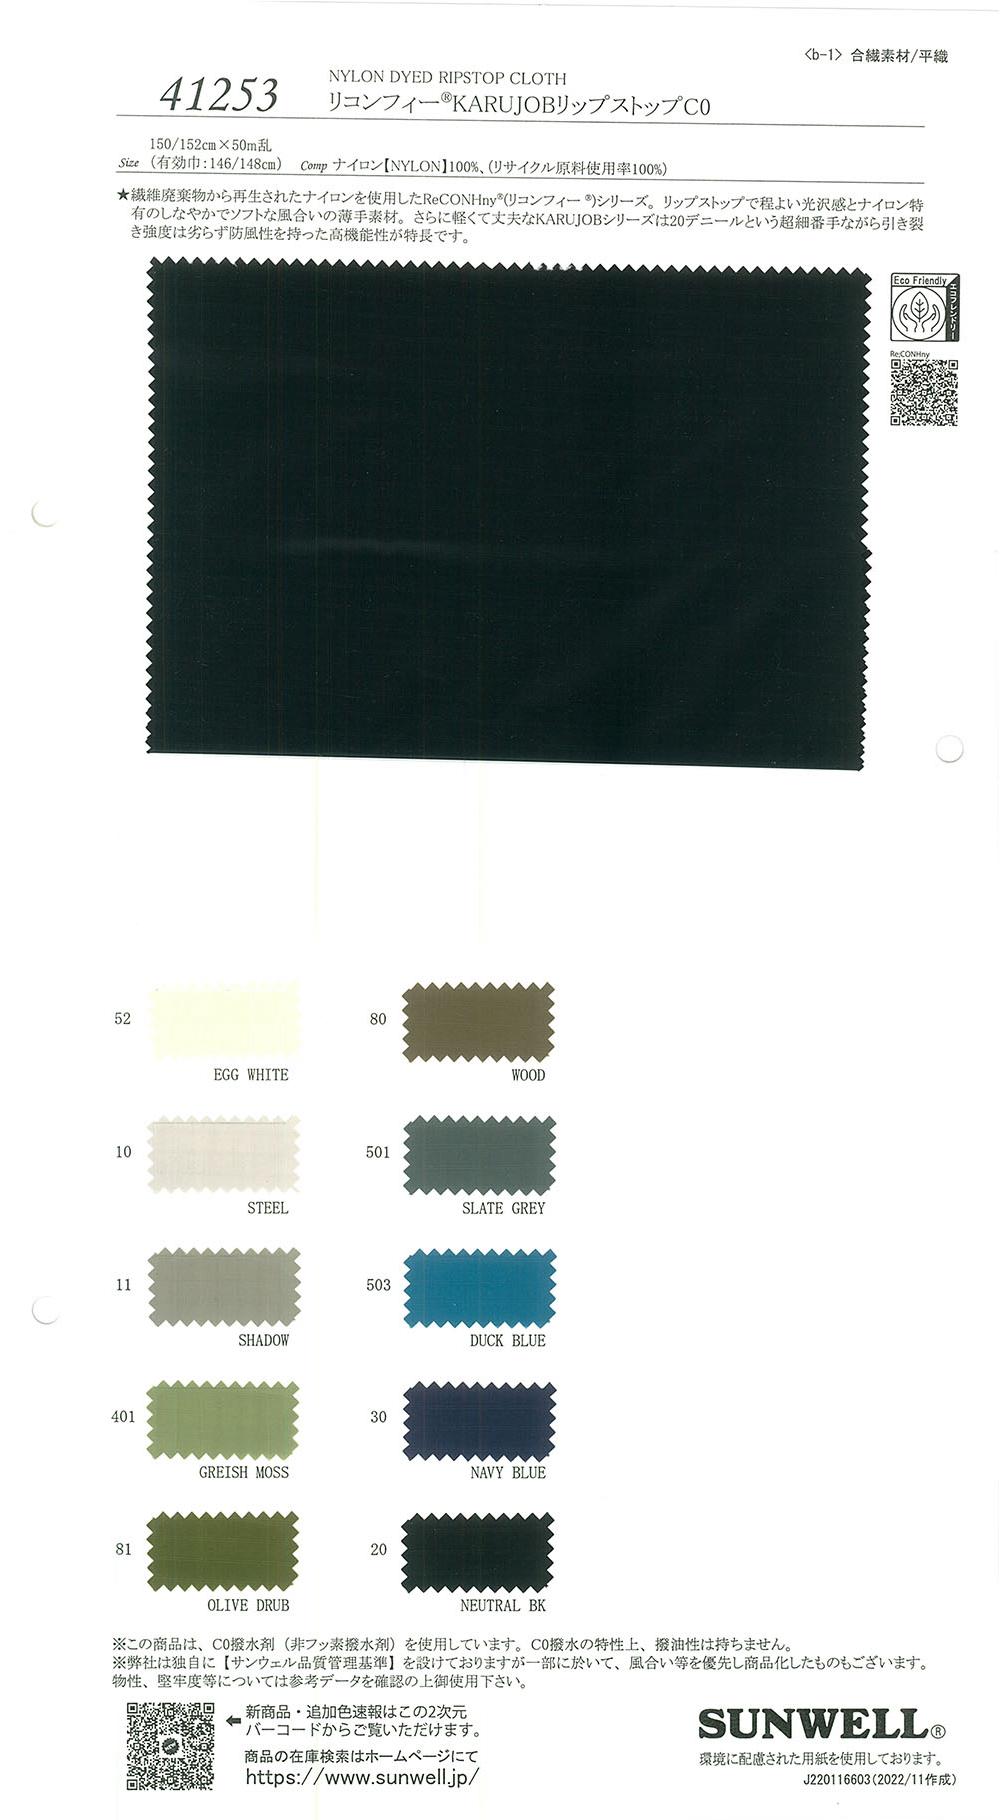 41253 ReCONHny® KARUJOB Ripstop C0[Textile / Fabric] SUNWELL